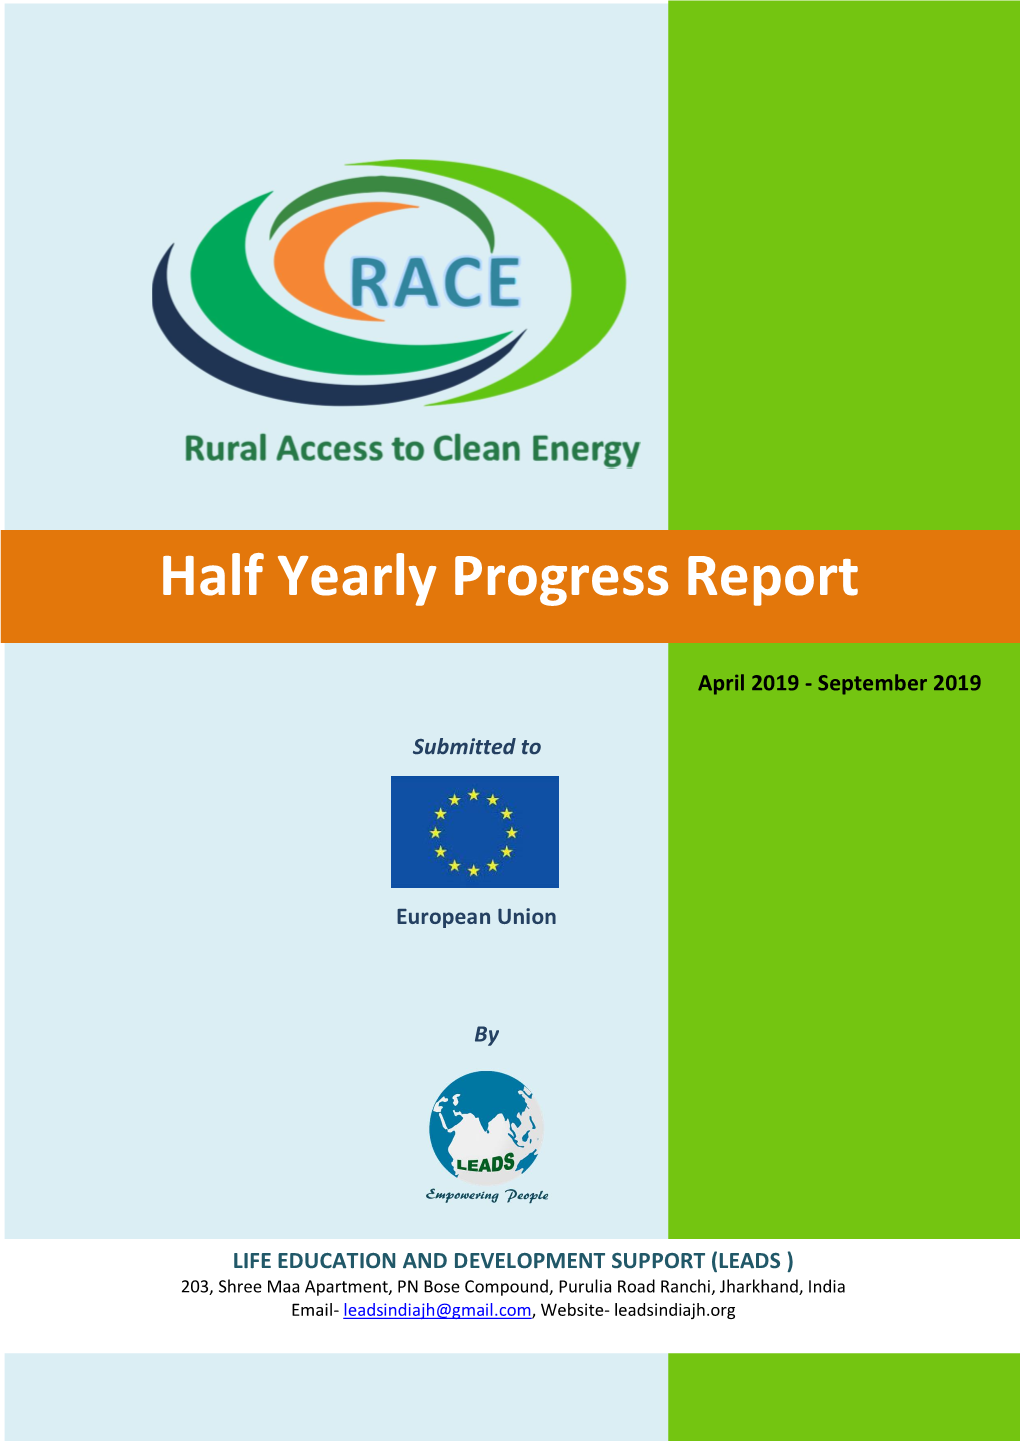 Half Yearly Progress Report